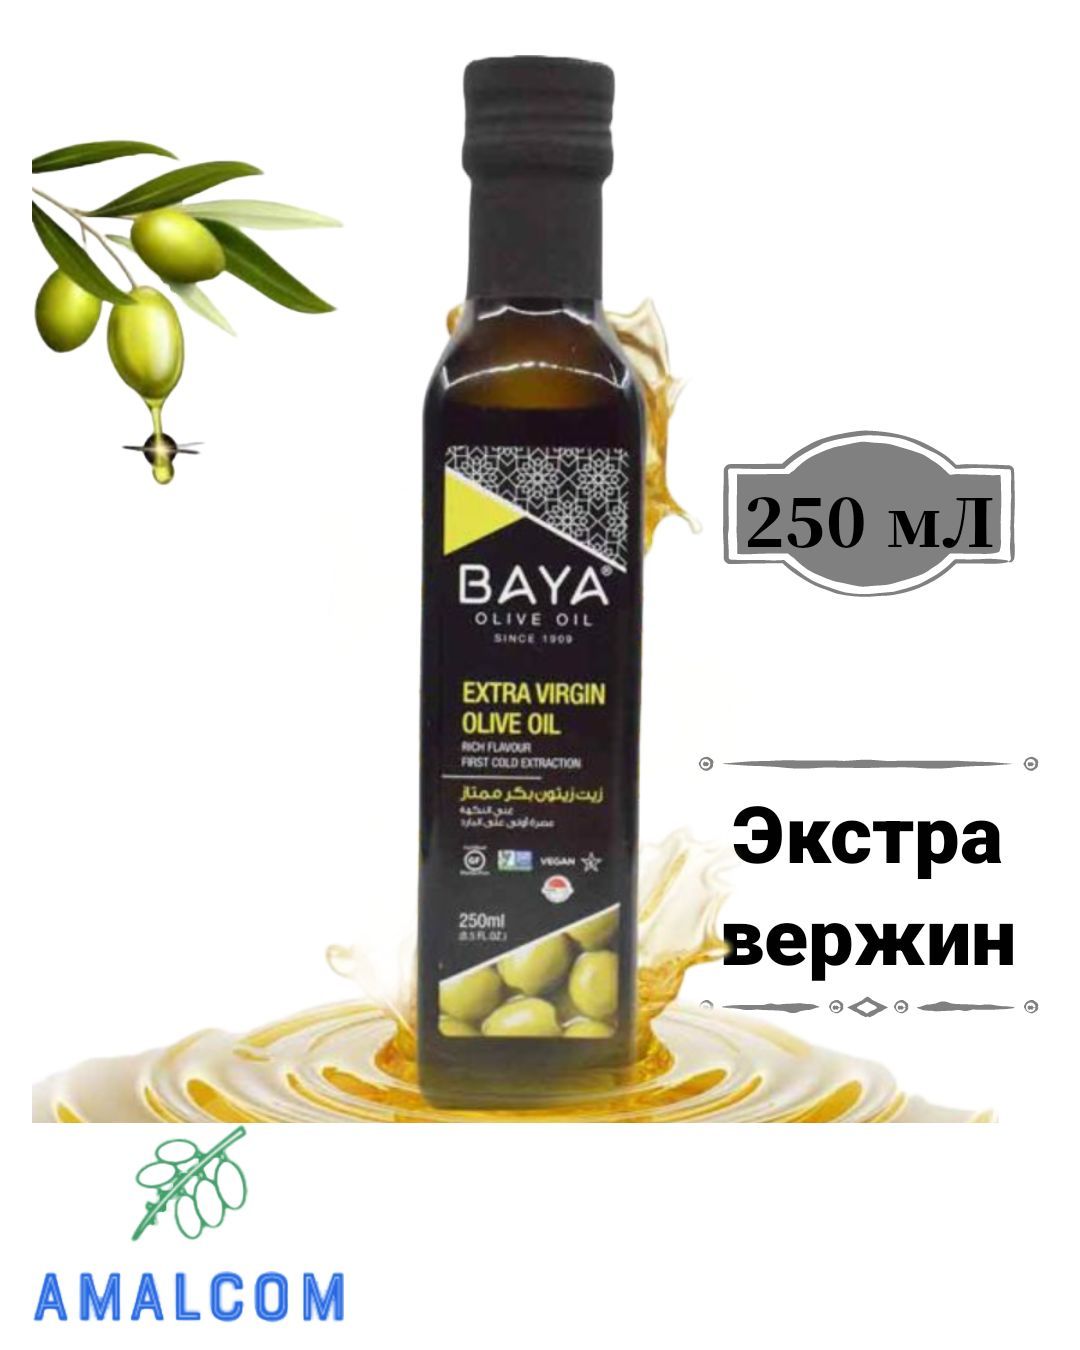 Оливковое масло baya. Baya масло оливковое. Baya масло оливковое нераф 500мл.